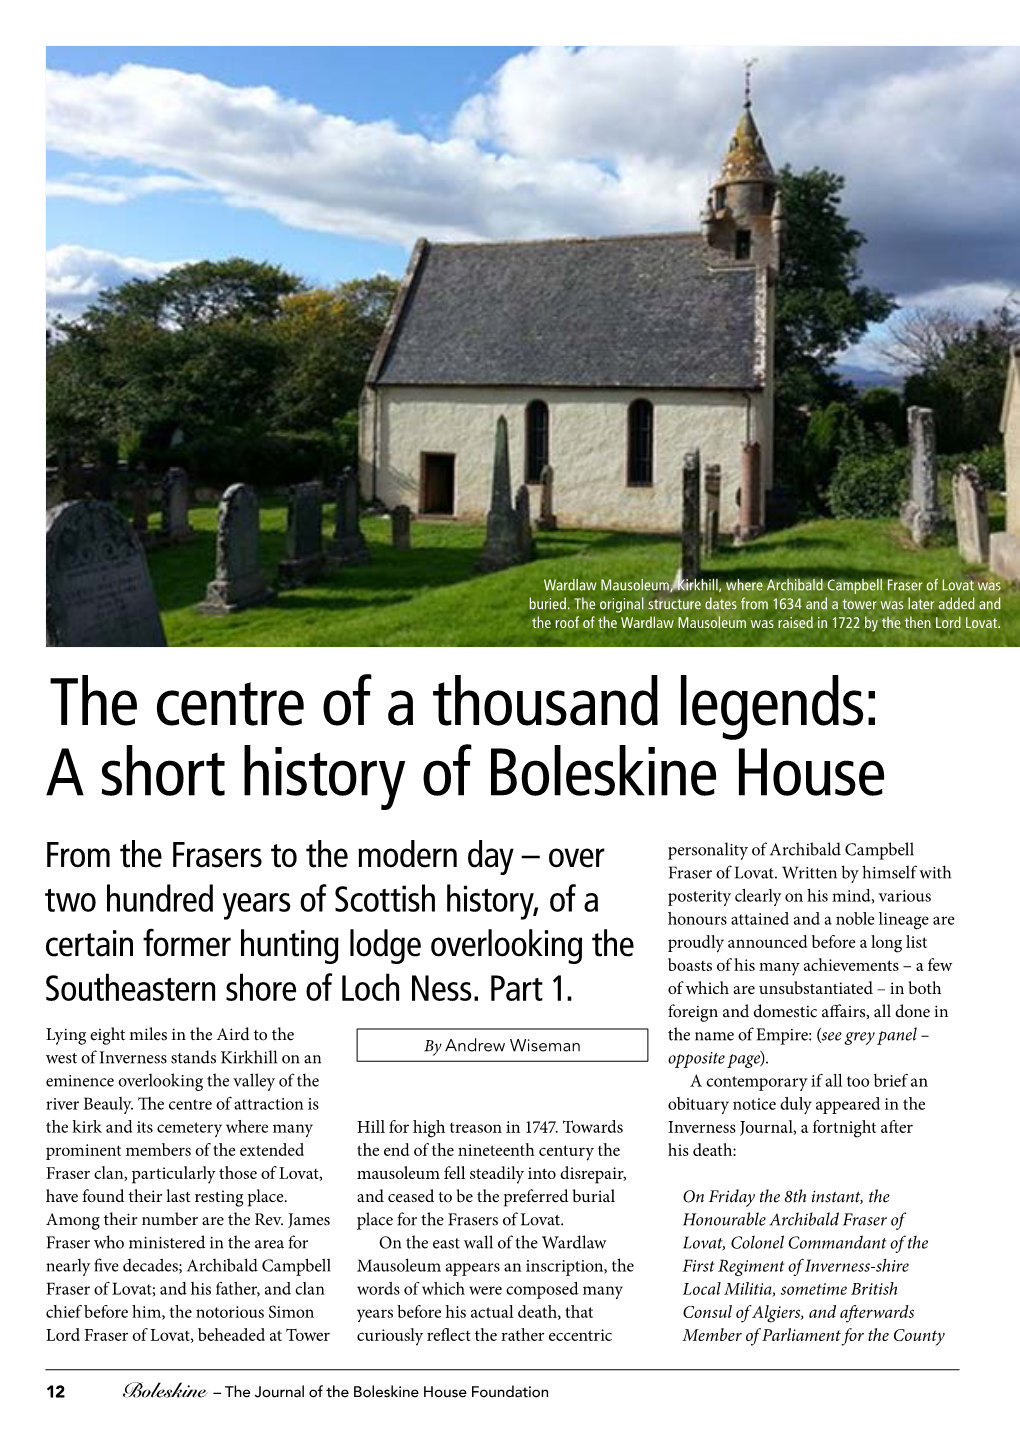 The Centre of a Thousand Legends: a Short History of Boleskine House